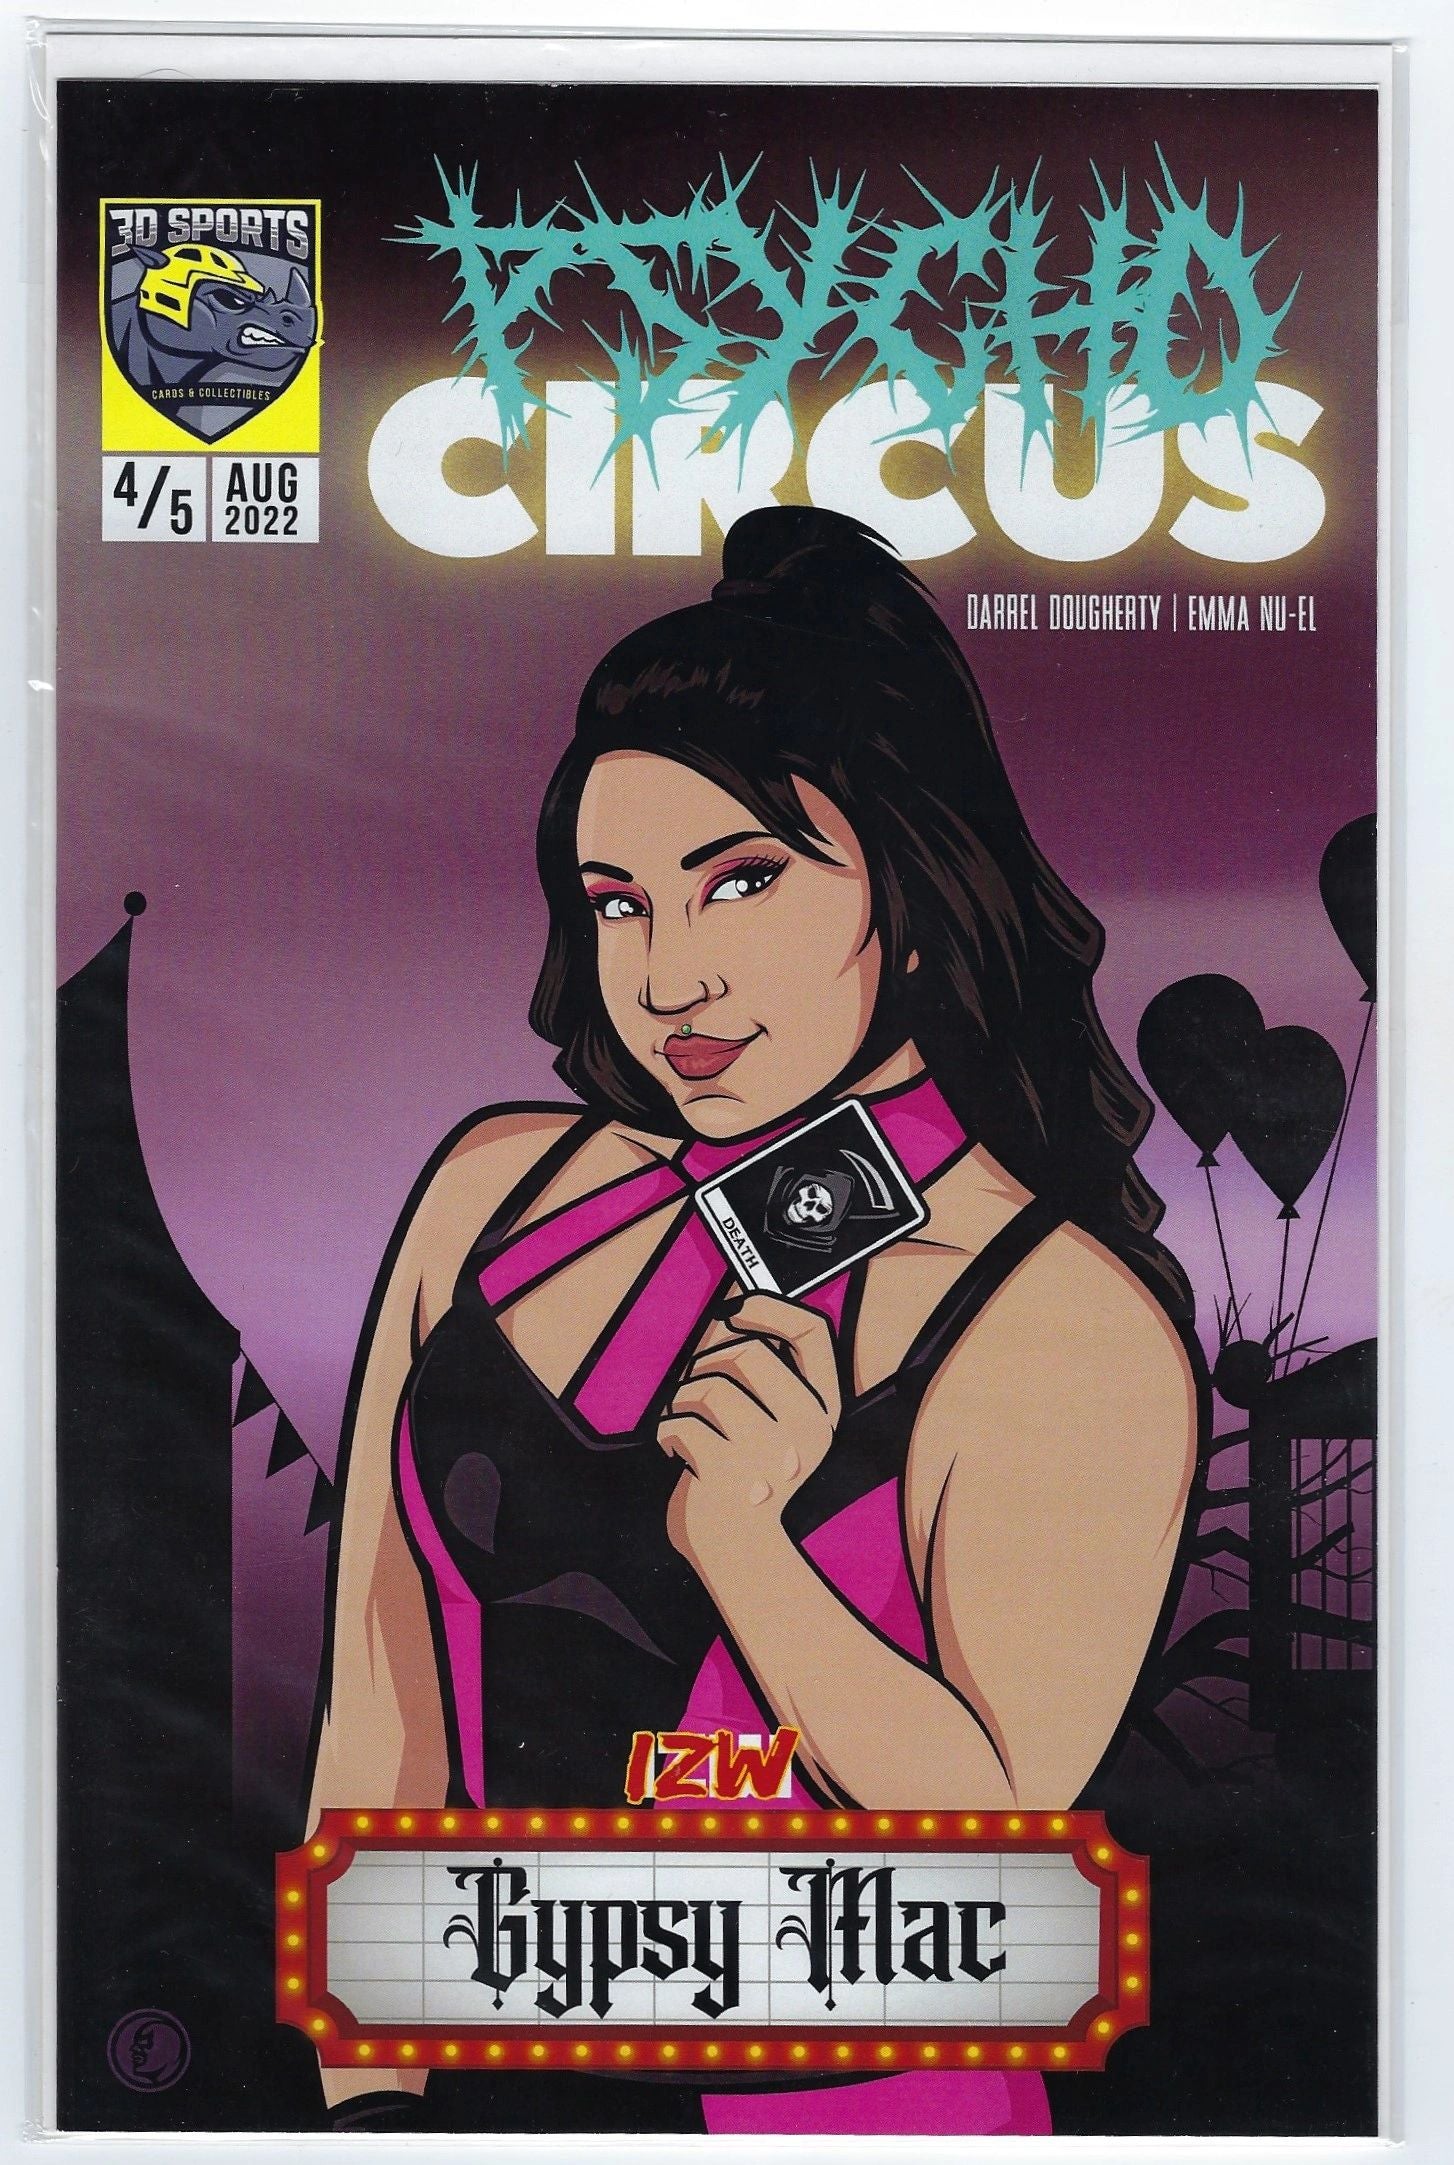 Gypsy Mac IZW Psycho Circus Comic Book Cover 4/5